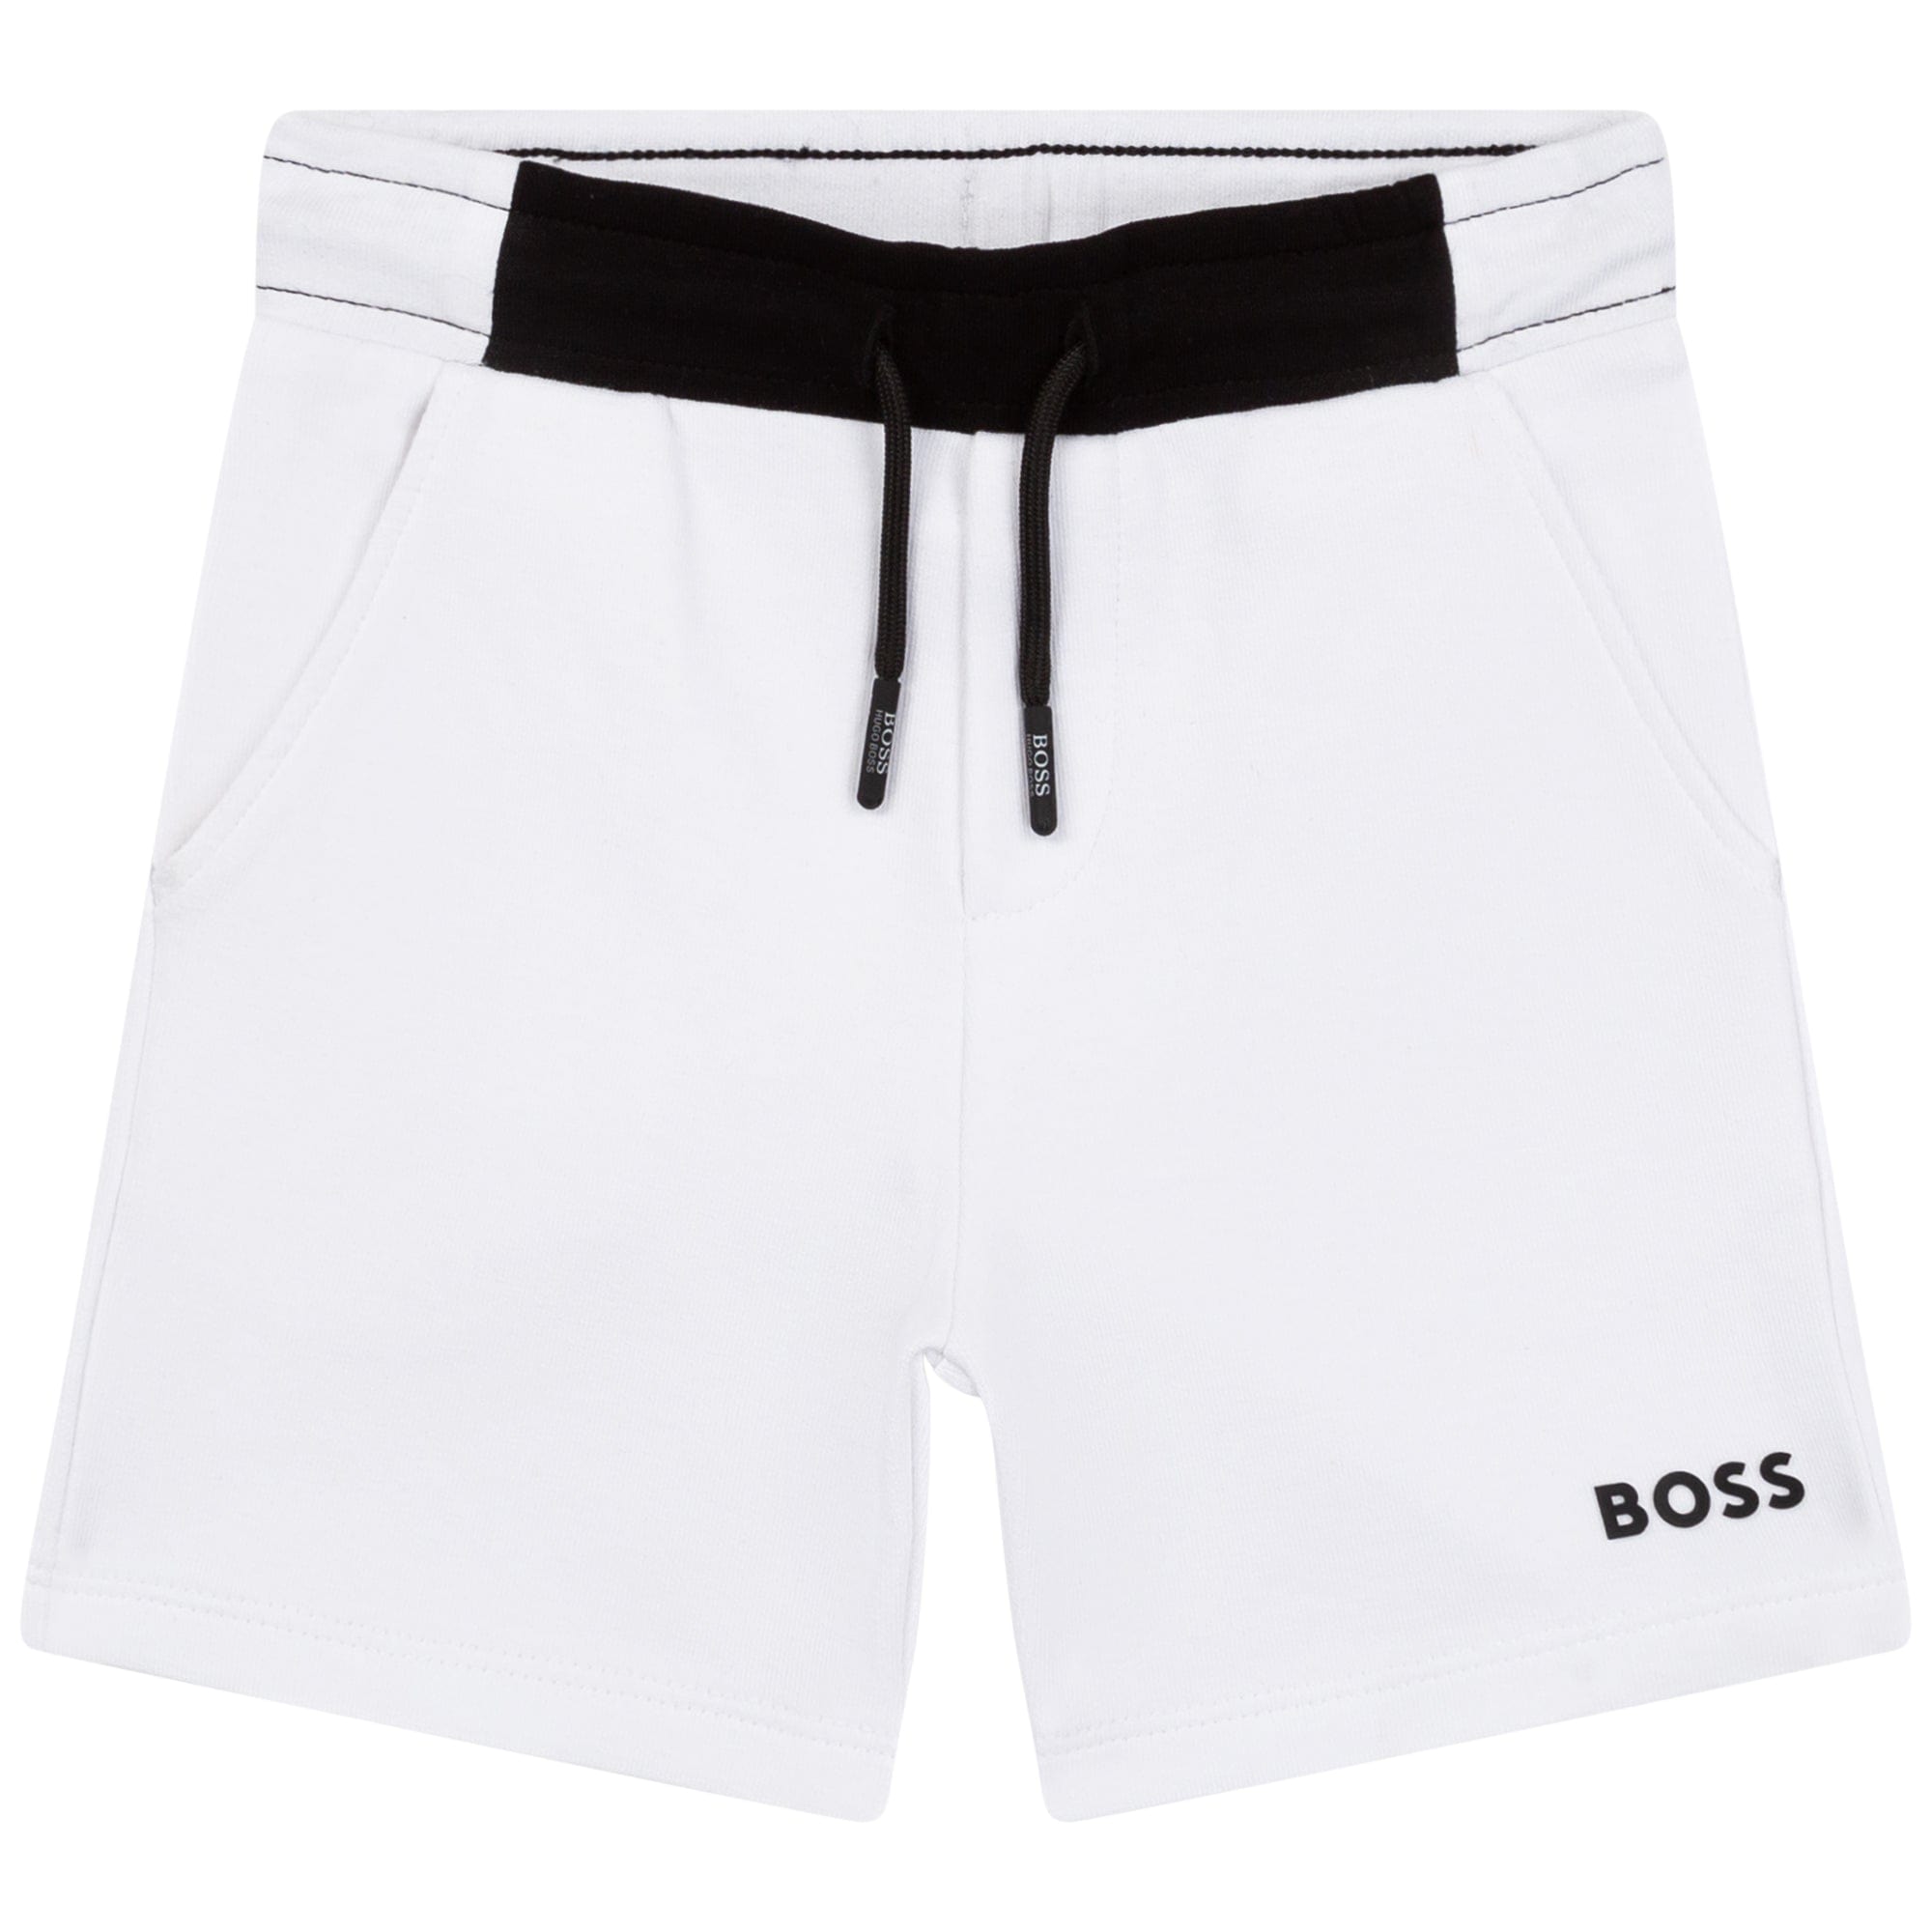 HUGO BOSS - Bermuda Short - White